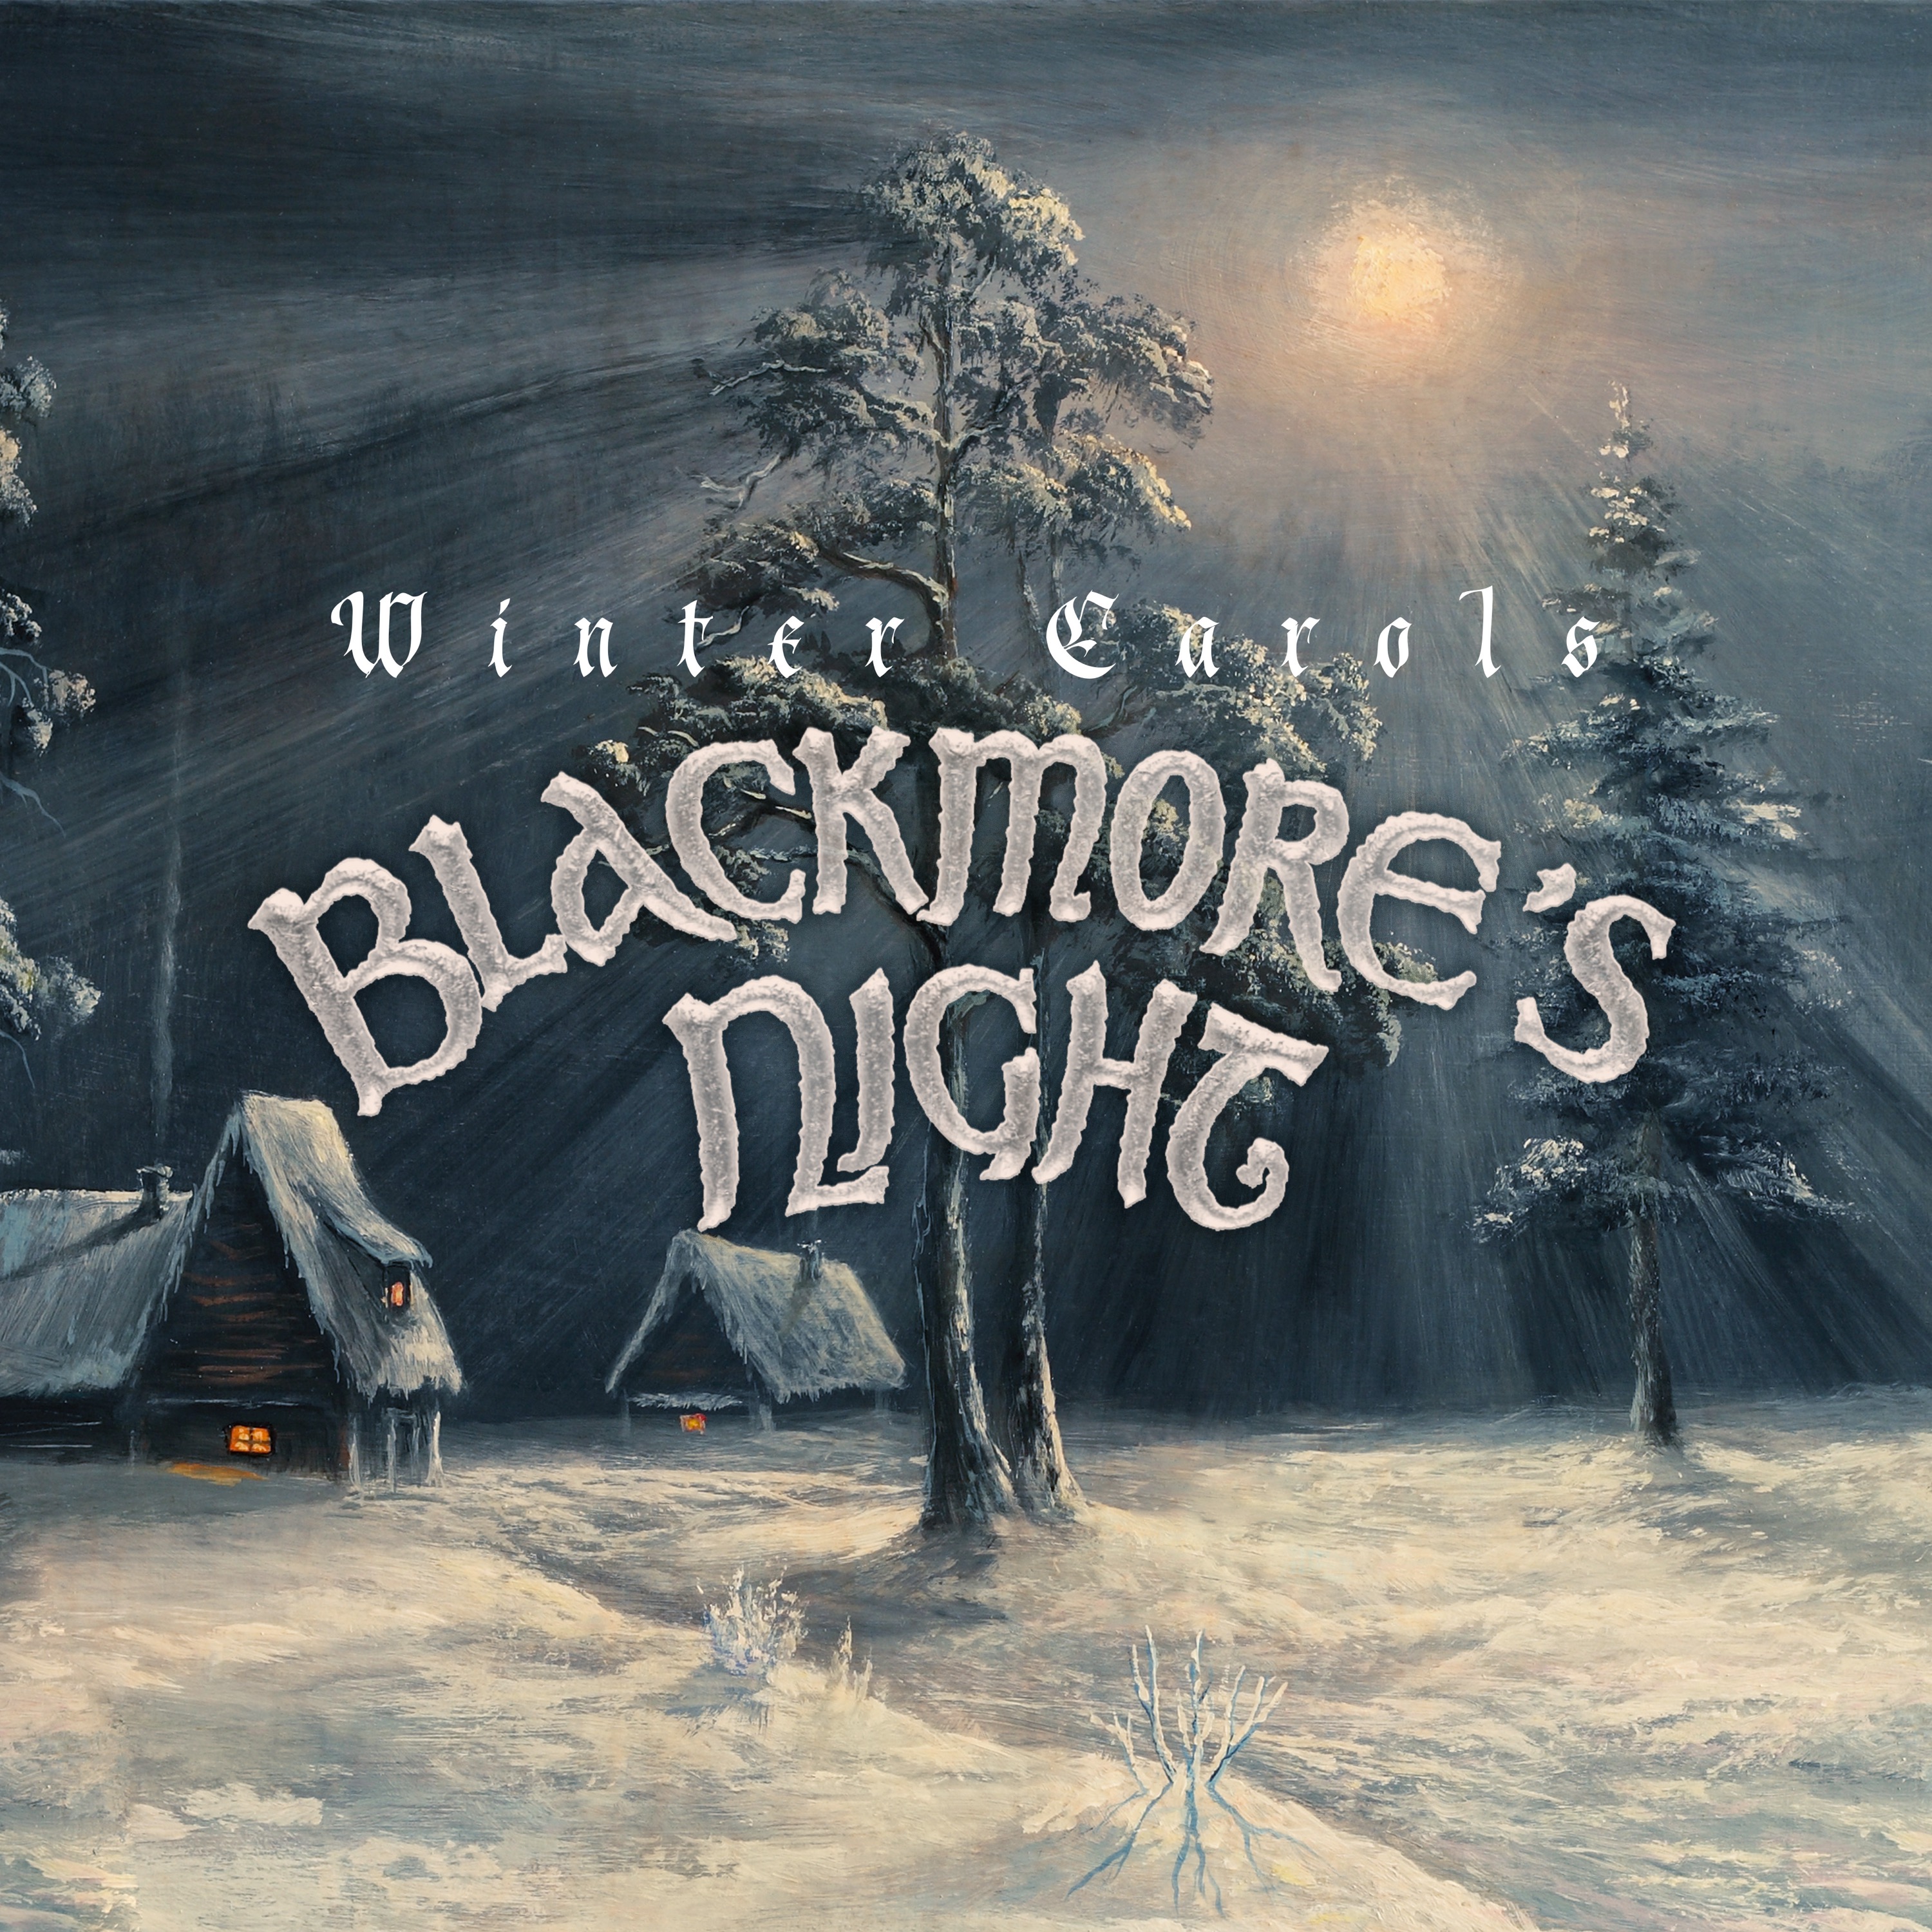 Blackmore's Night - Winter Carols (deluxe edition) - 2xCD